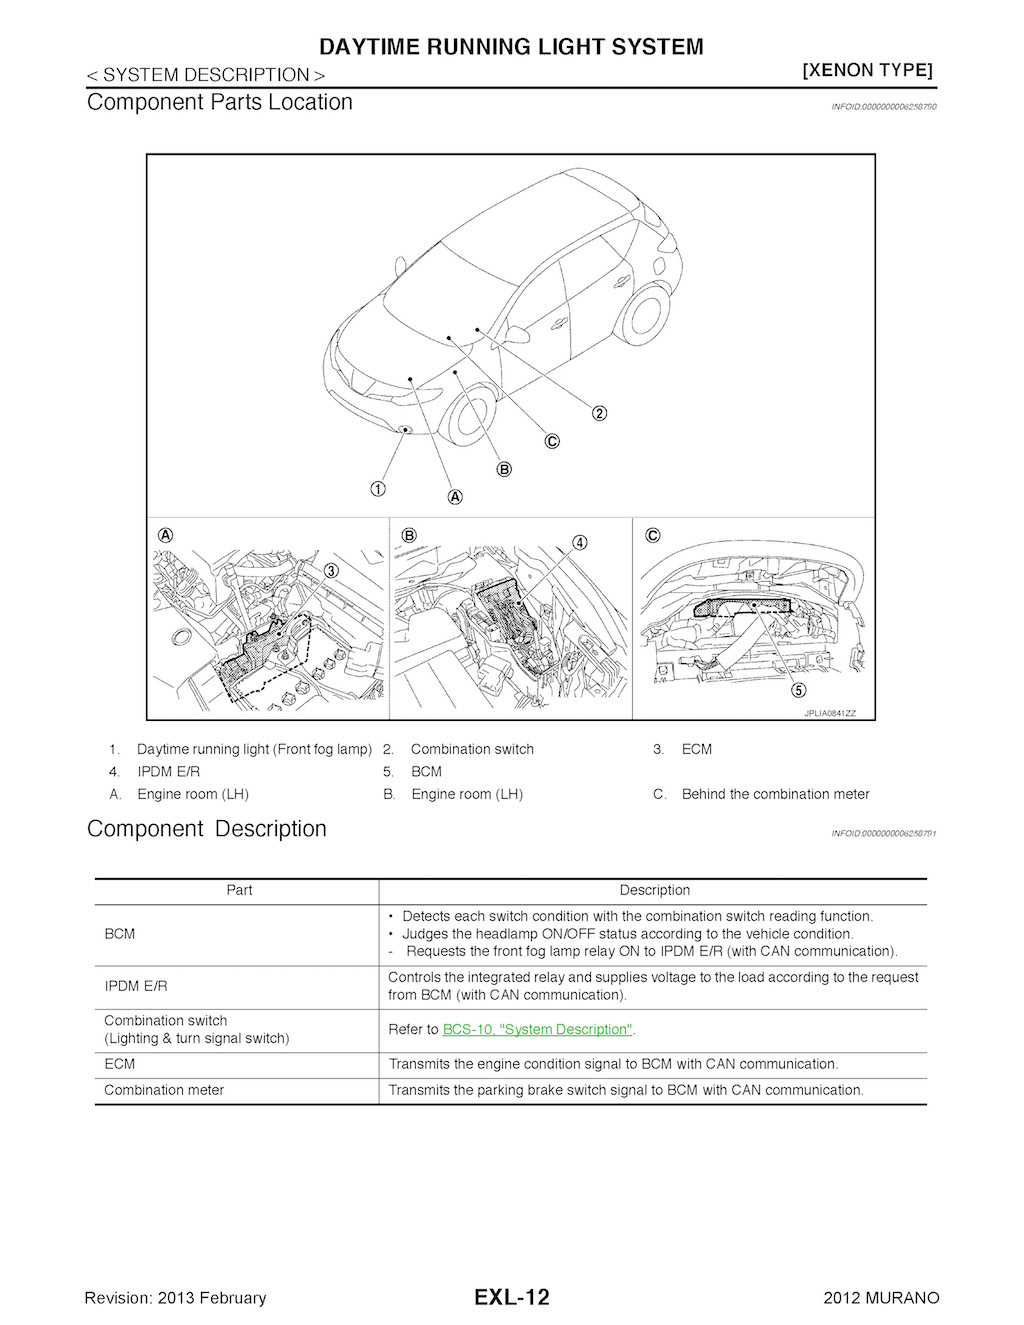 Download 2012 Nissan Murano and CrossCabriolet Repair Manual.